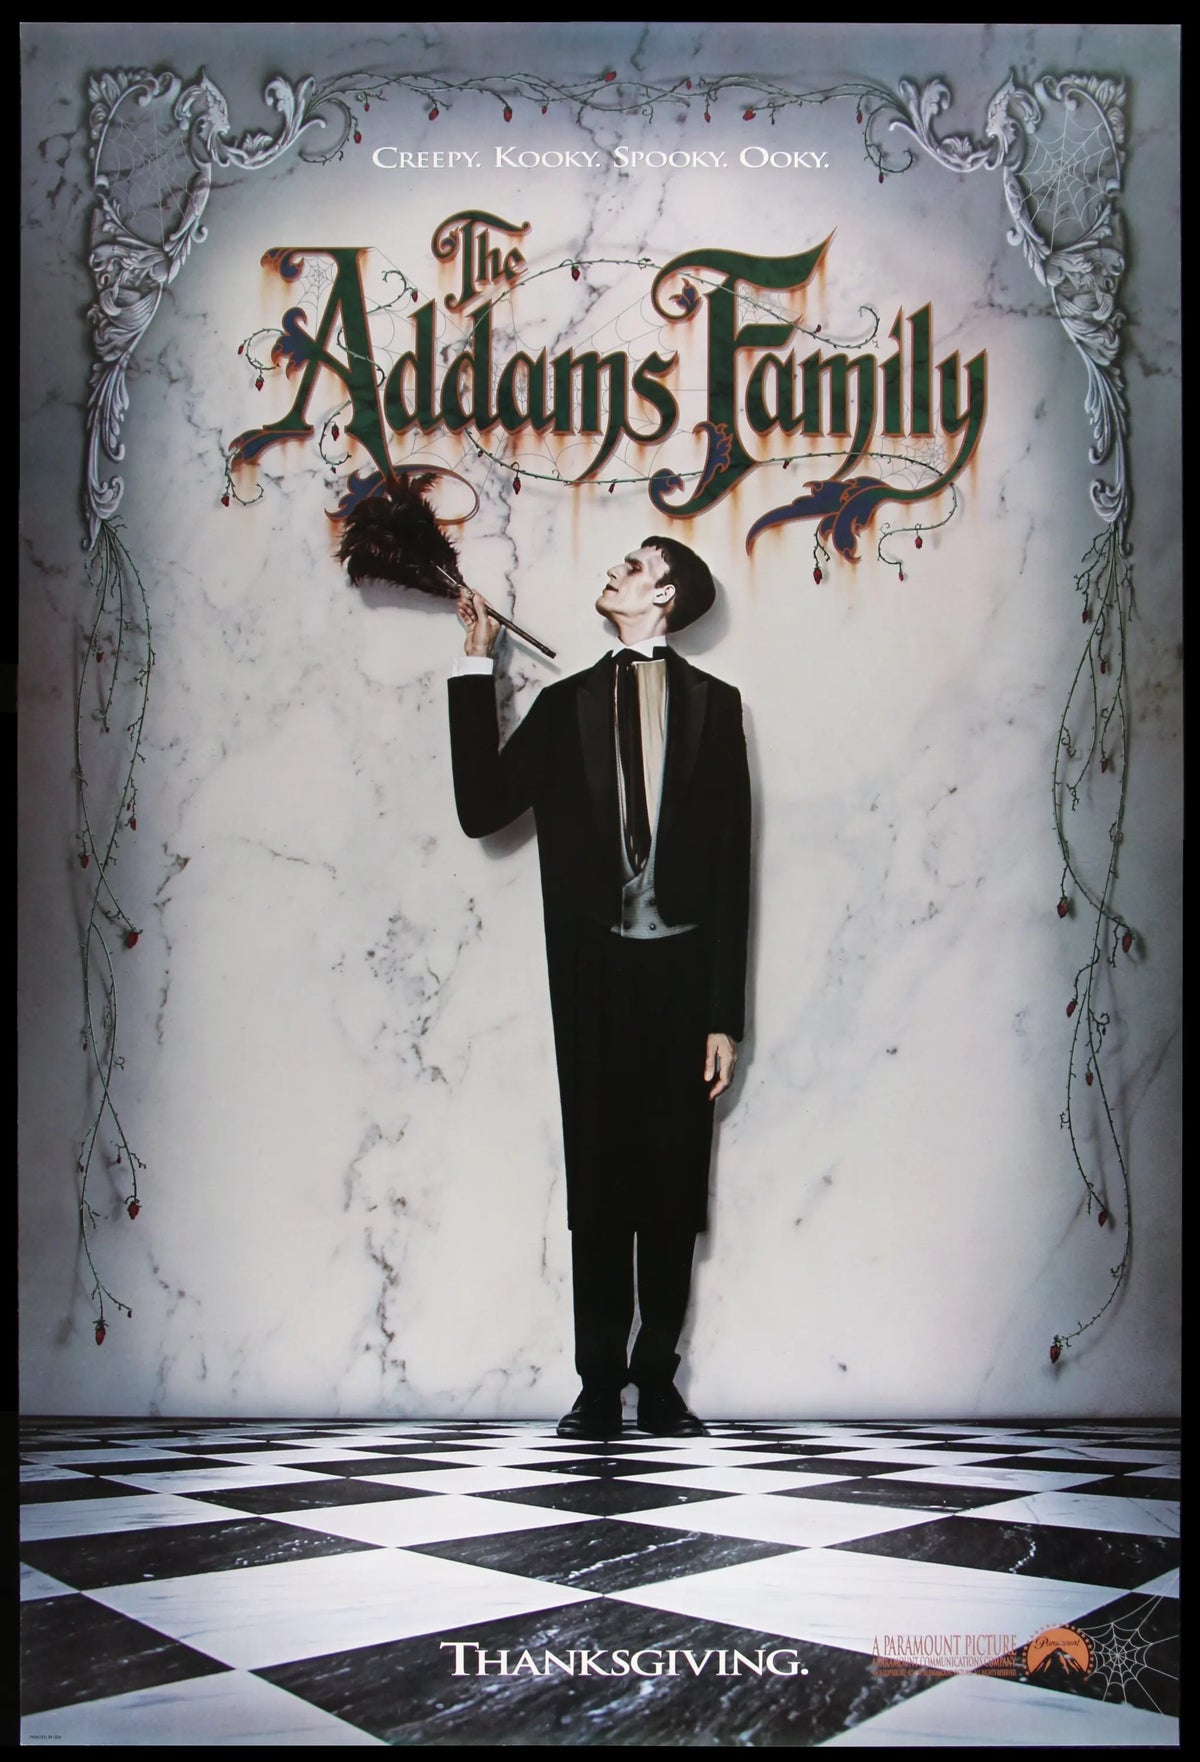 Addams Family (1991) original movie poster for sale at Original Film Art